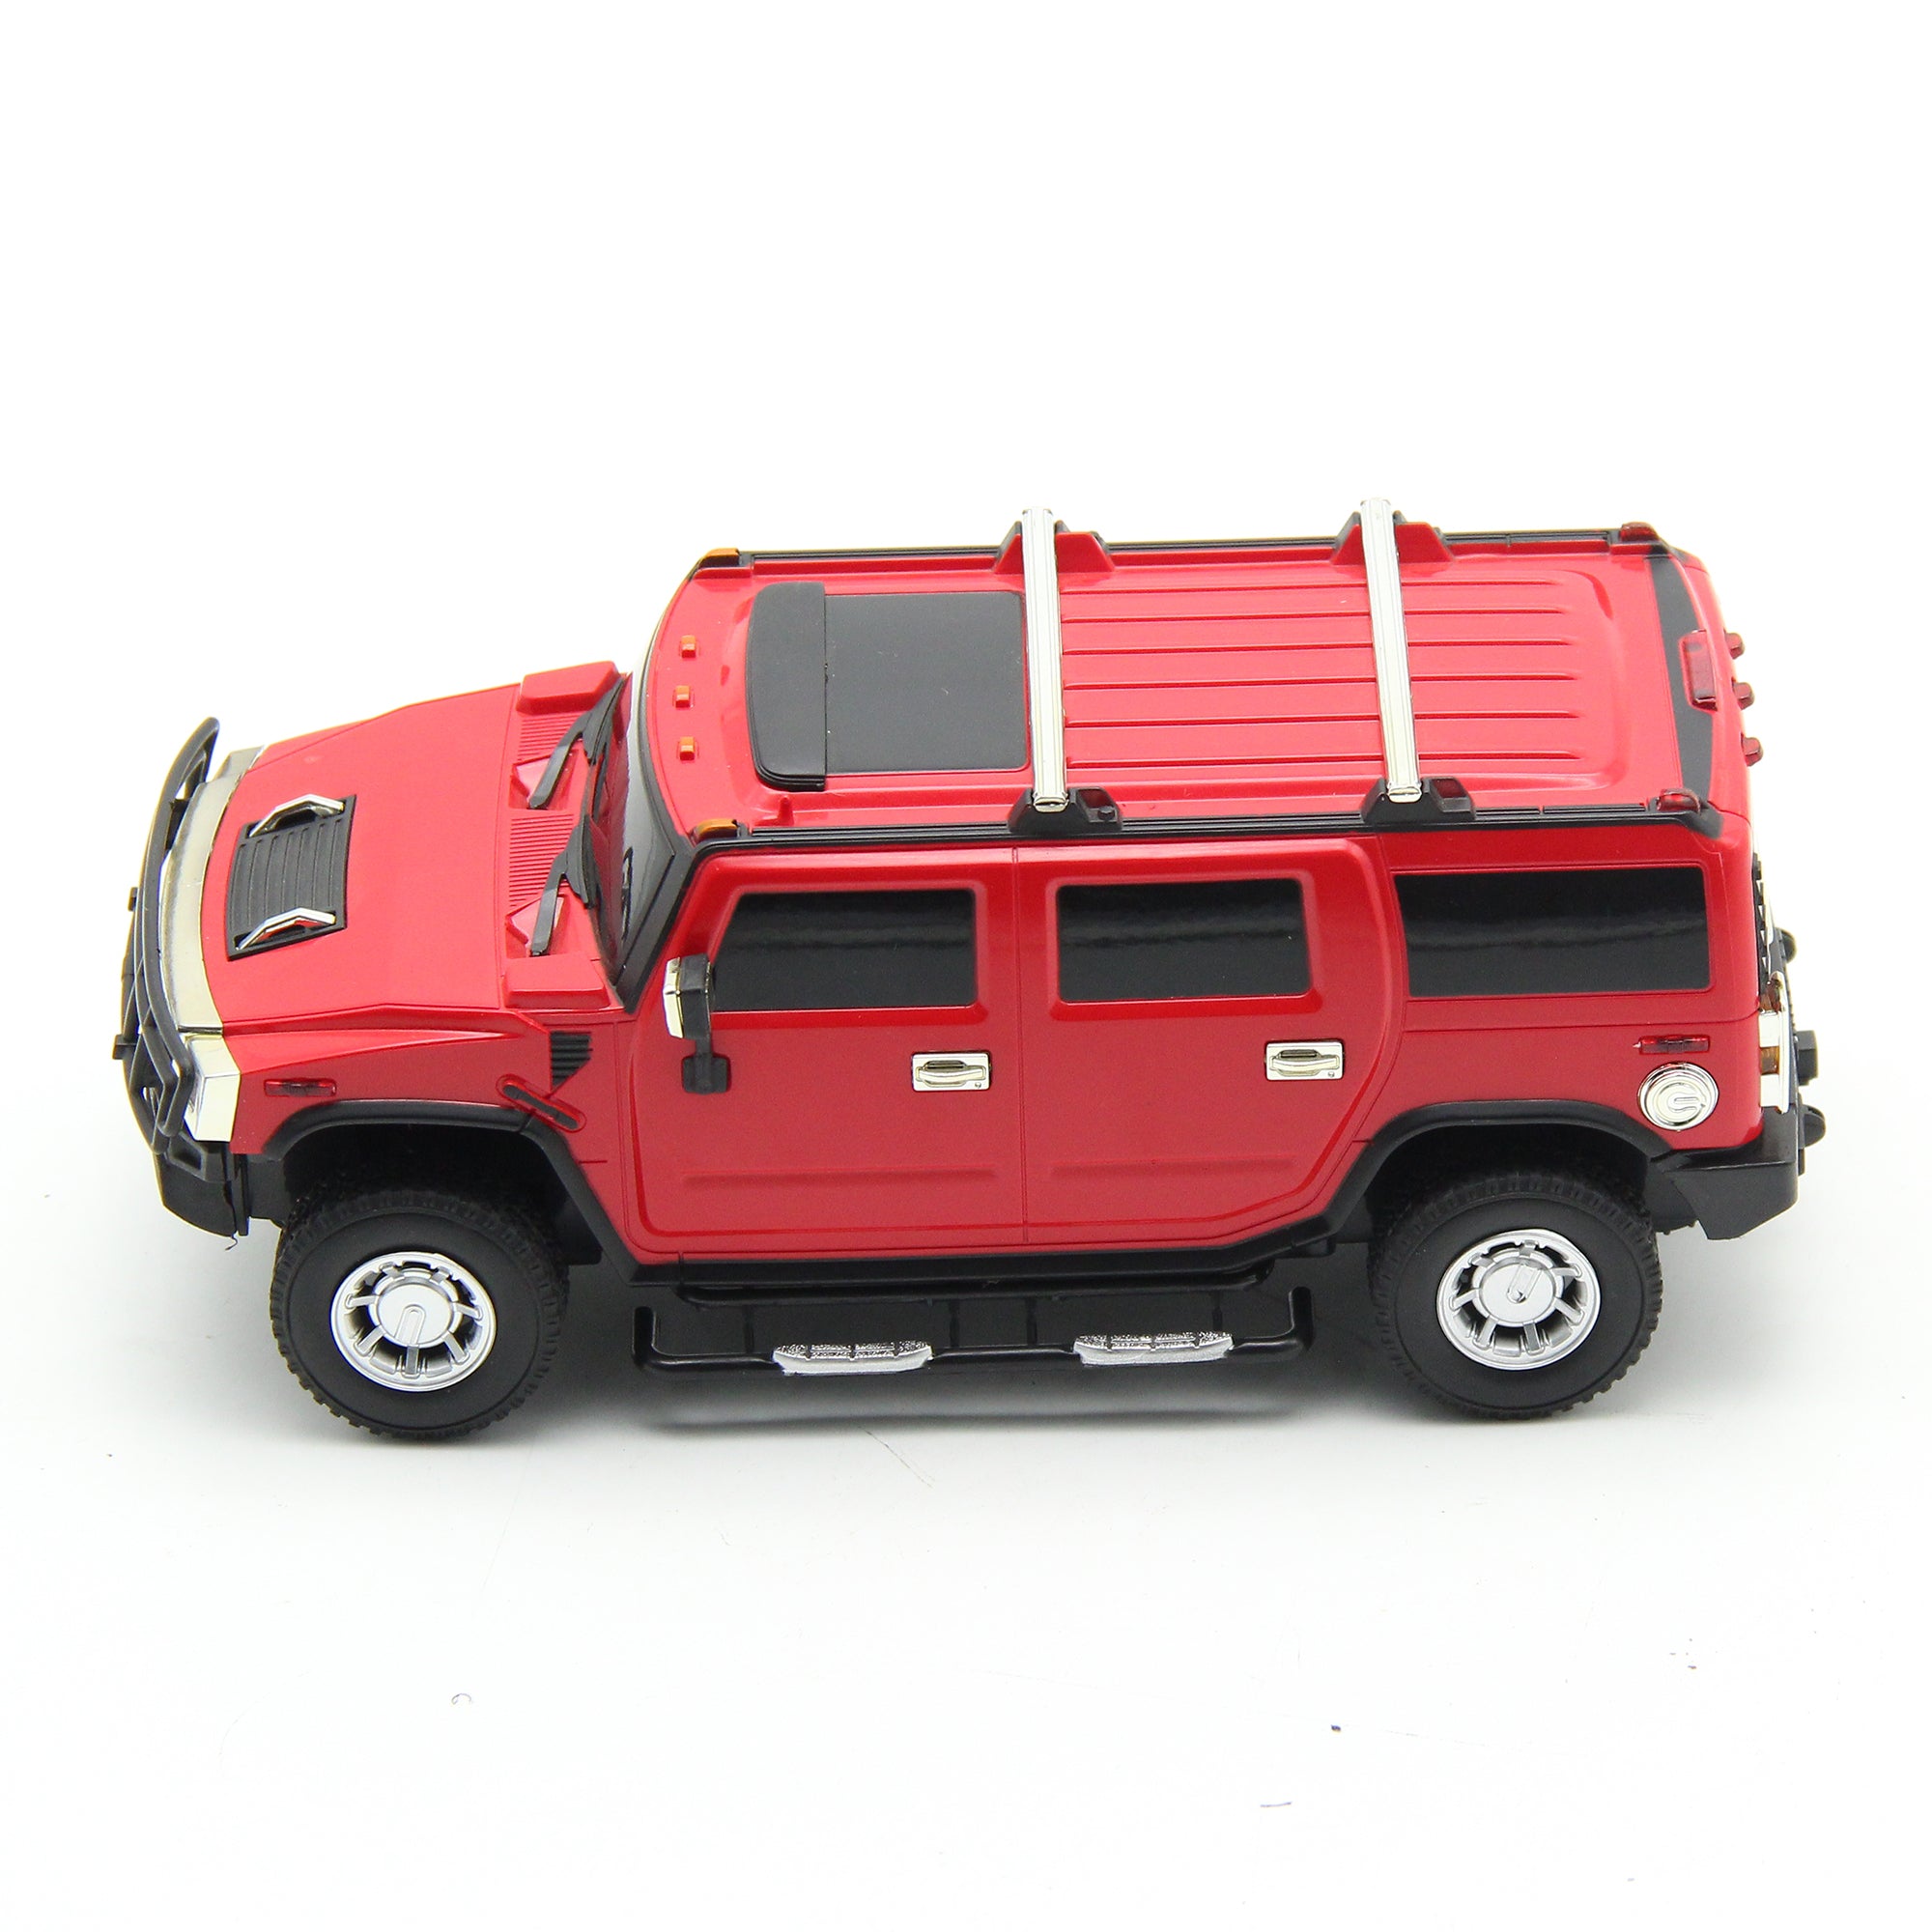 Playzu Remote Control Car Series,Army Vehicle R/C 1:24 - Red,  1:24 Scale